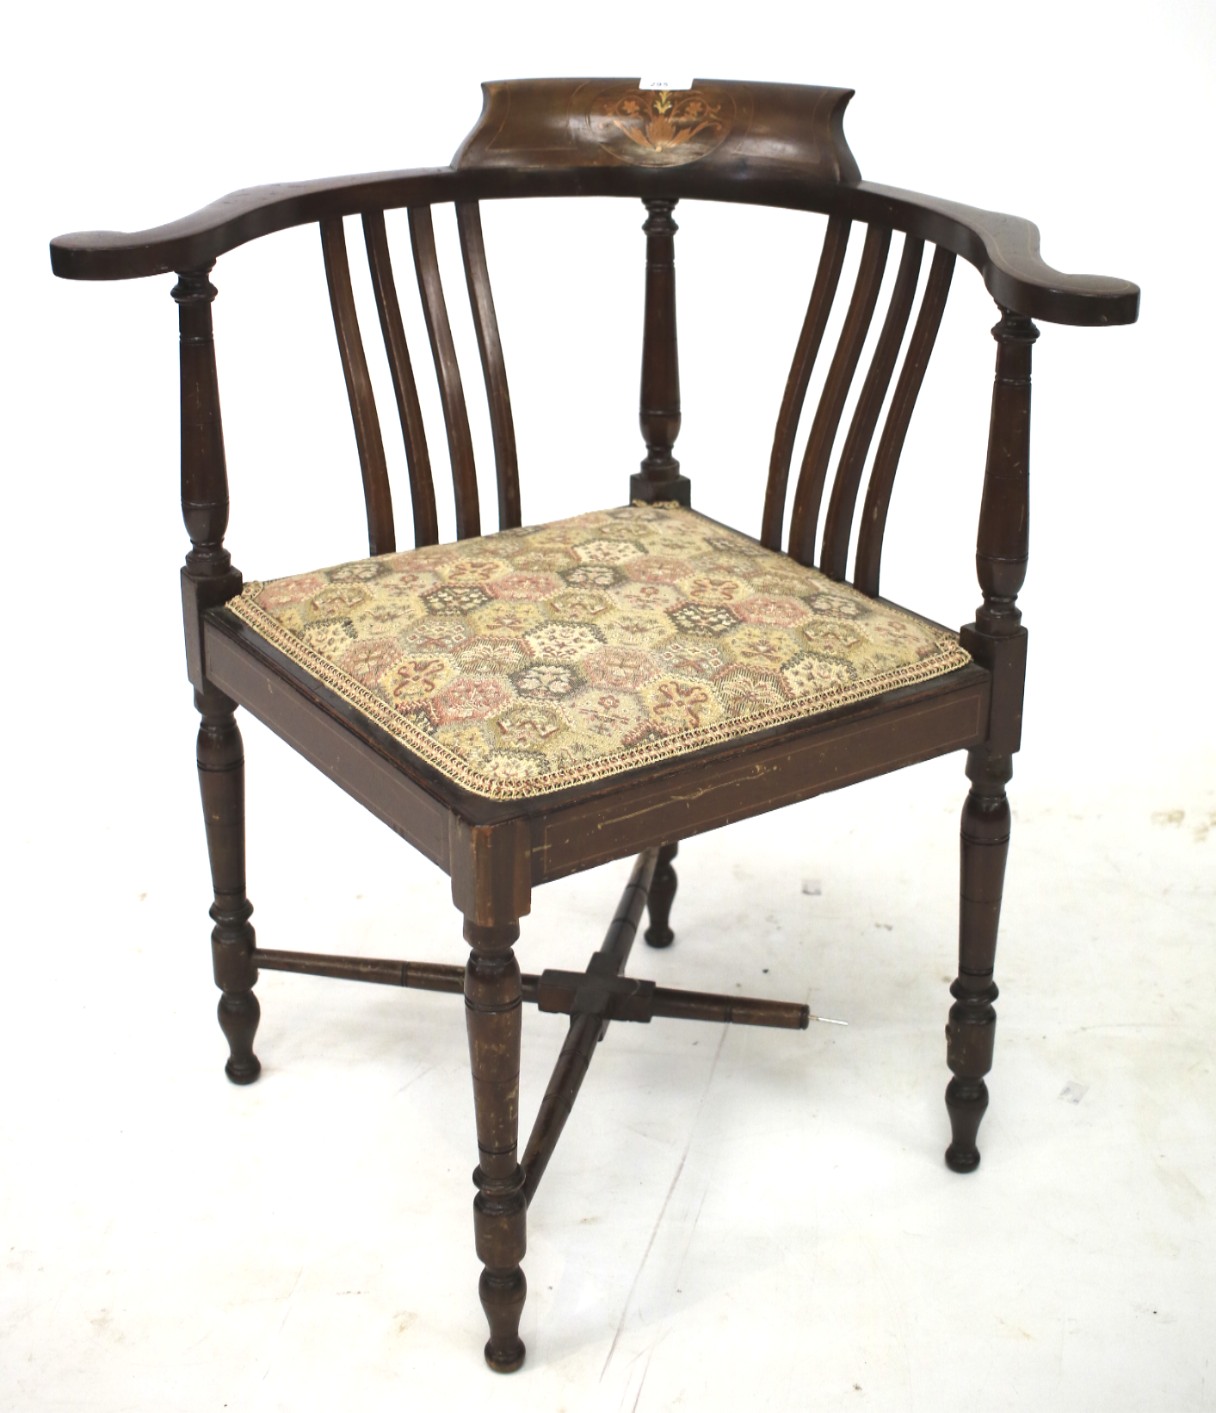 A Regency style mahogany corner chair.